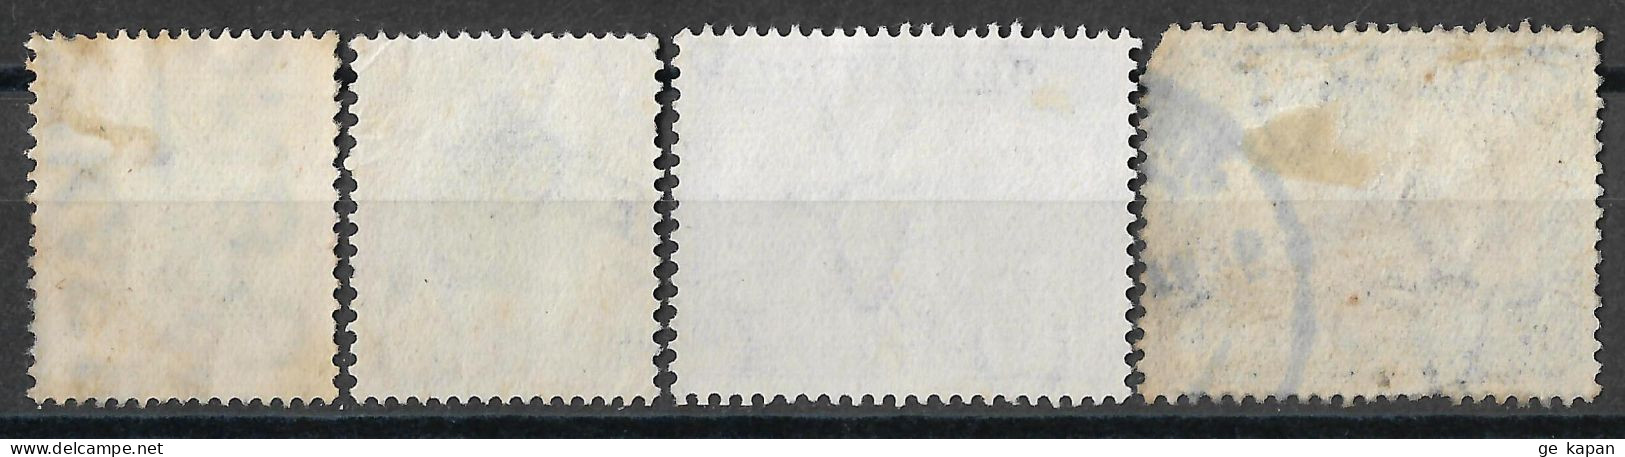 1926-1931 SOUTH AFRICA Set Of 4 USED STAMPS (Scott # 24b,25a,36a,43b) CV $3.95 - Oblitérés